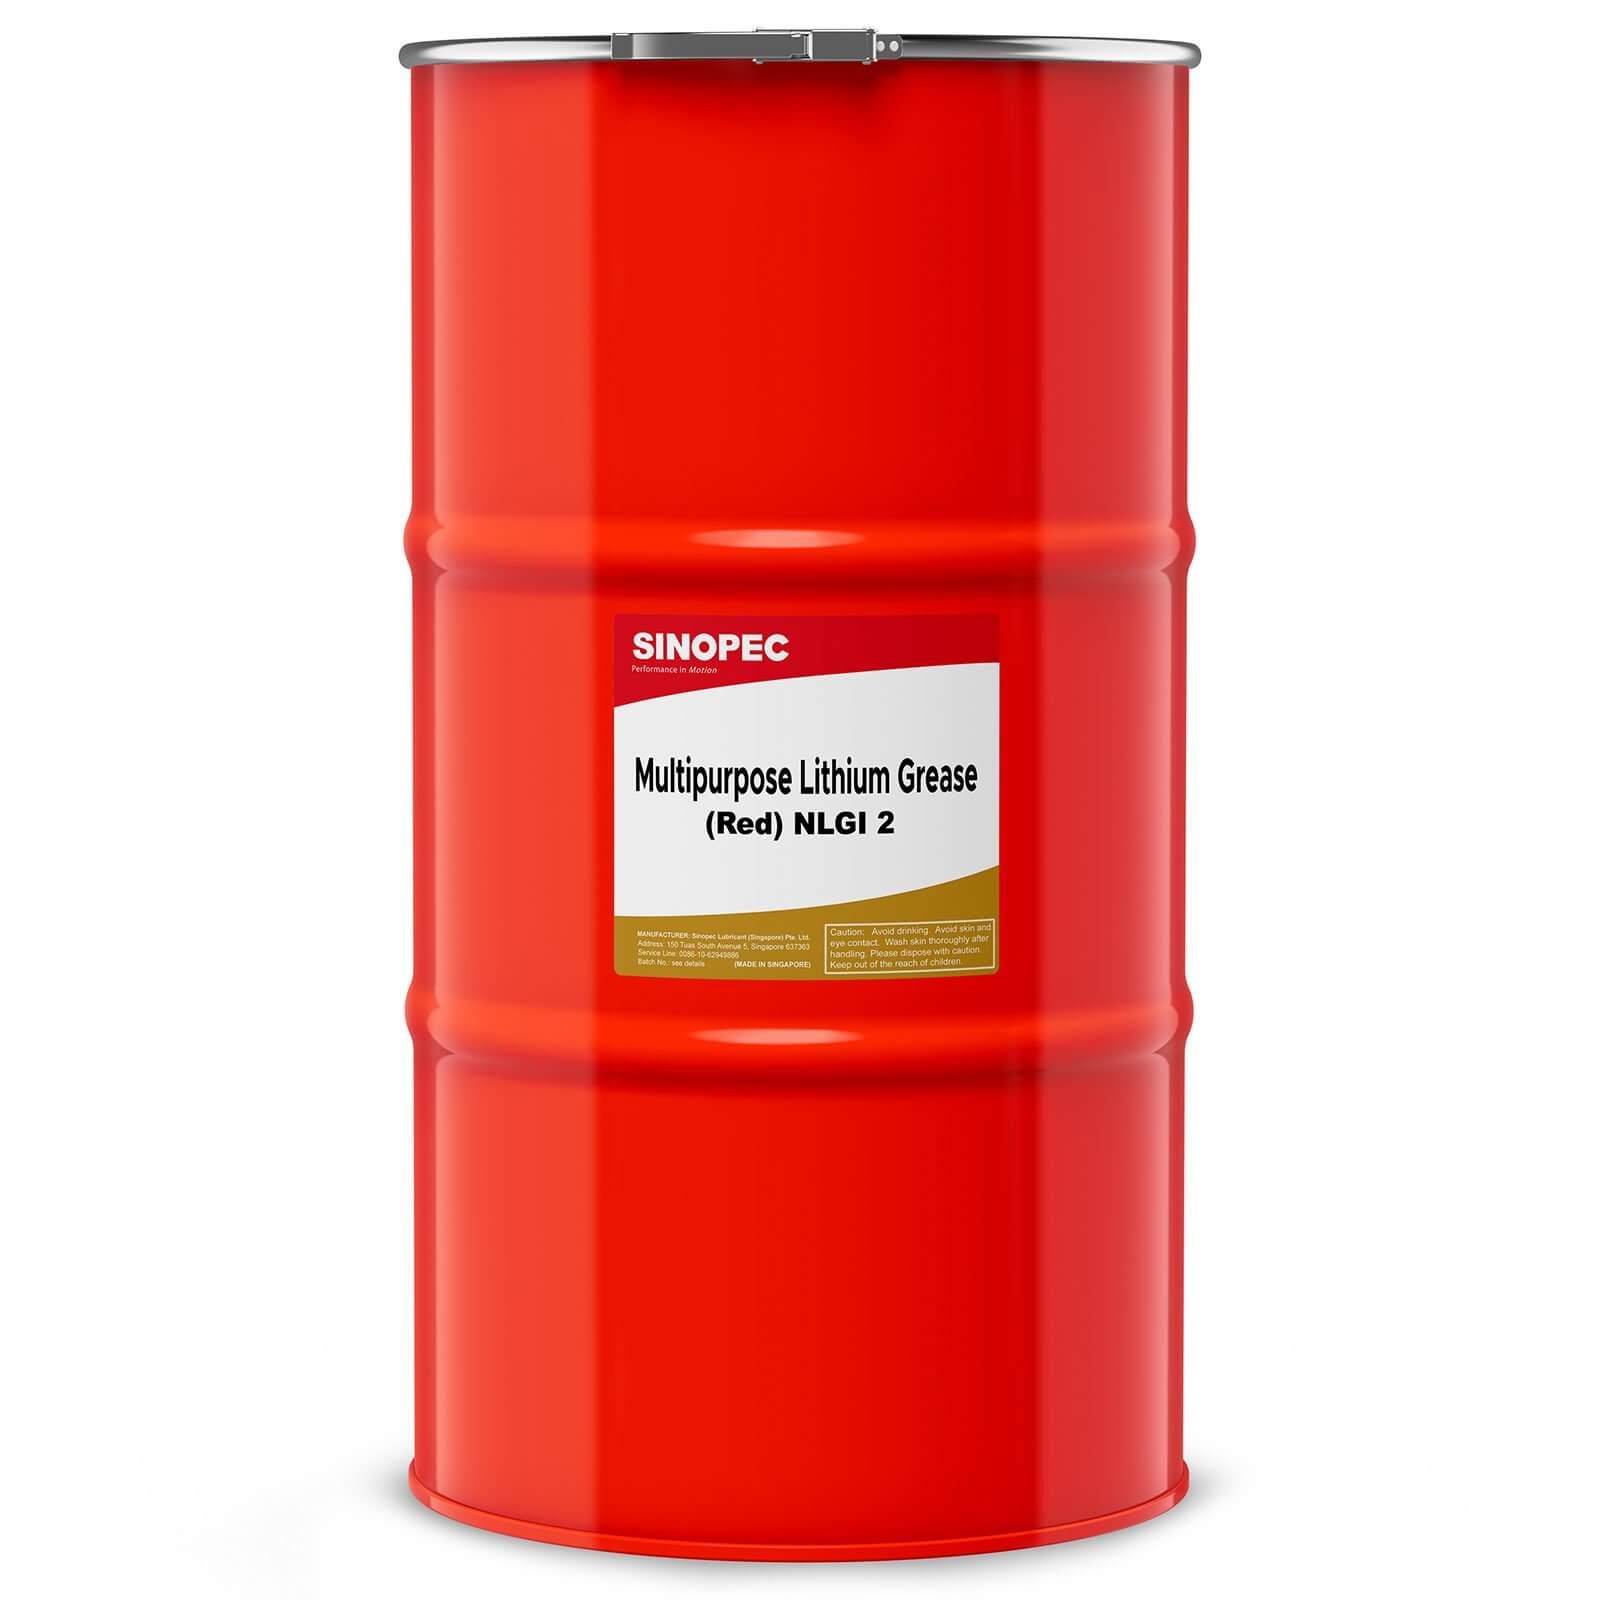 Red Lithium Multi-purpose Grease #2-SINOPEC-Brand_Sinopec,Category_Grease,Grade_NLGI 2,sinopec,Size_120 LB Keg,Type_Red Grease